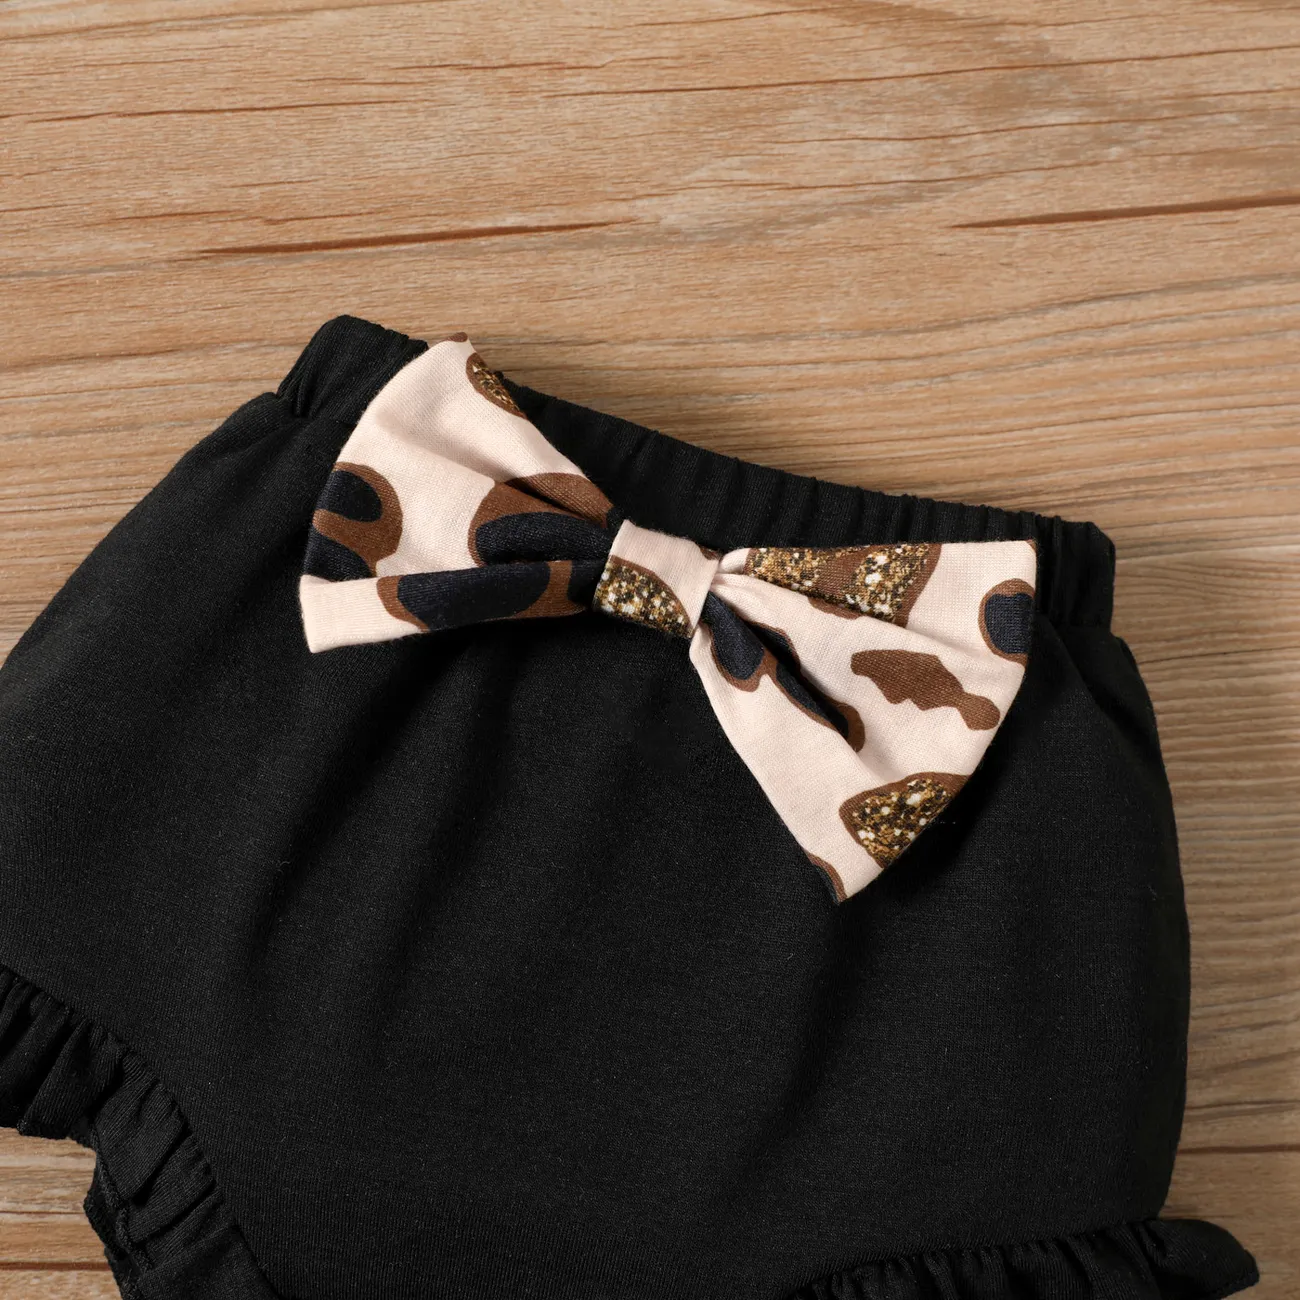 3pcs Baby Girl Leopard Sleeveless Top and Bowknot Shorts with Headband Set Black big image 1